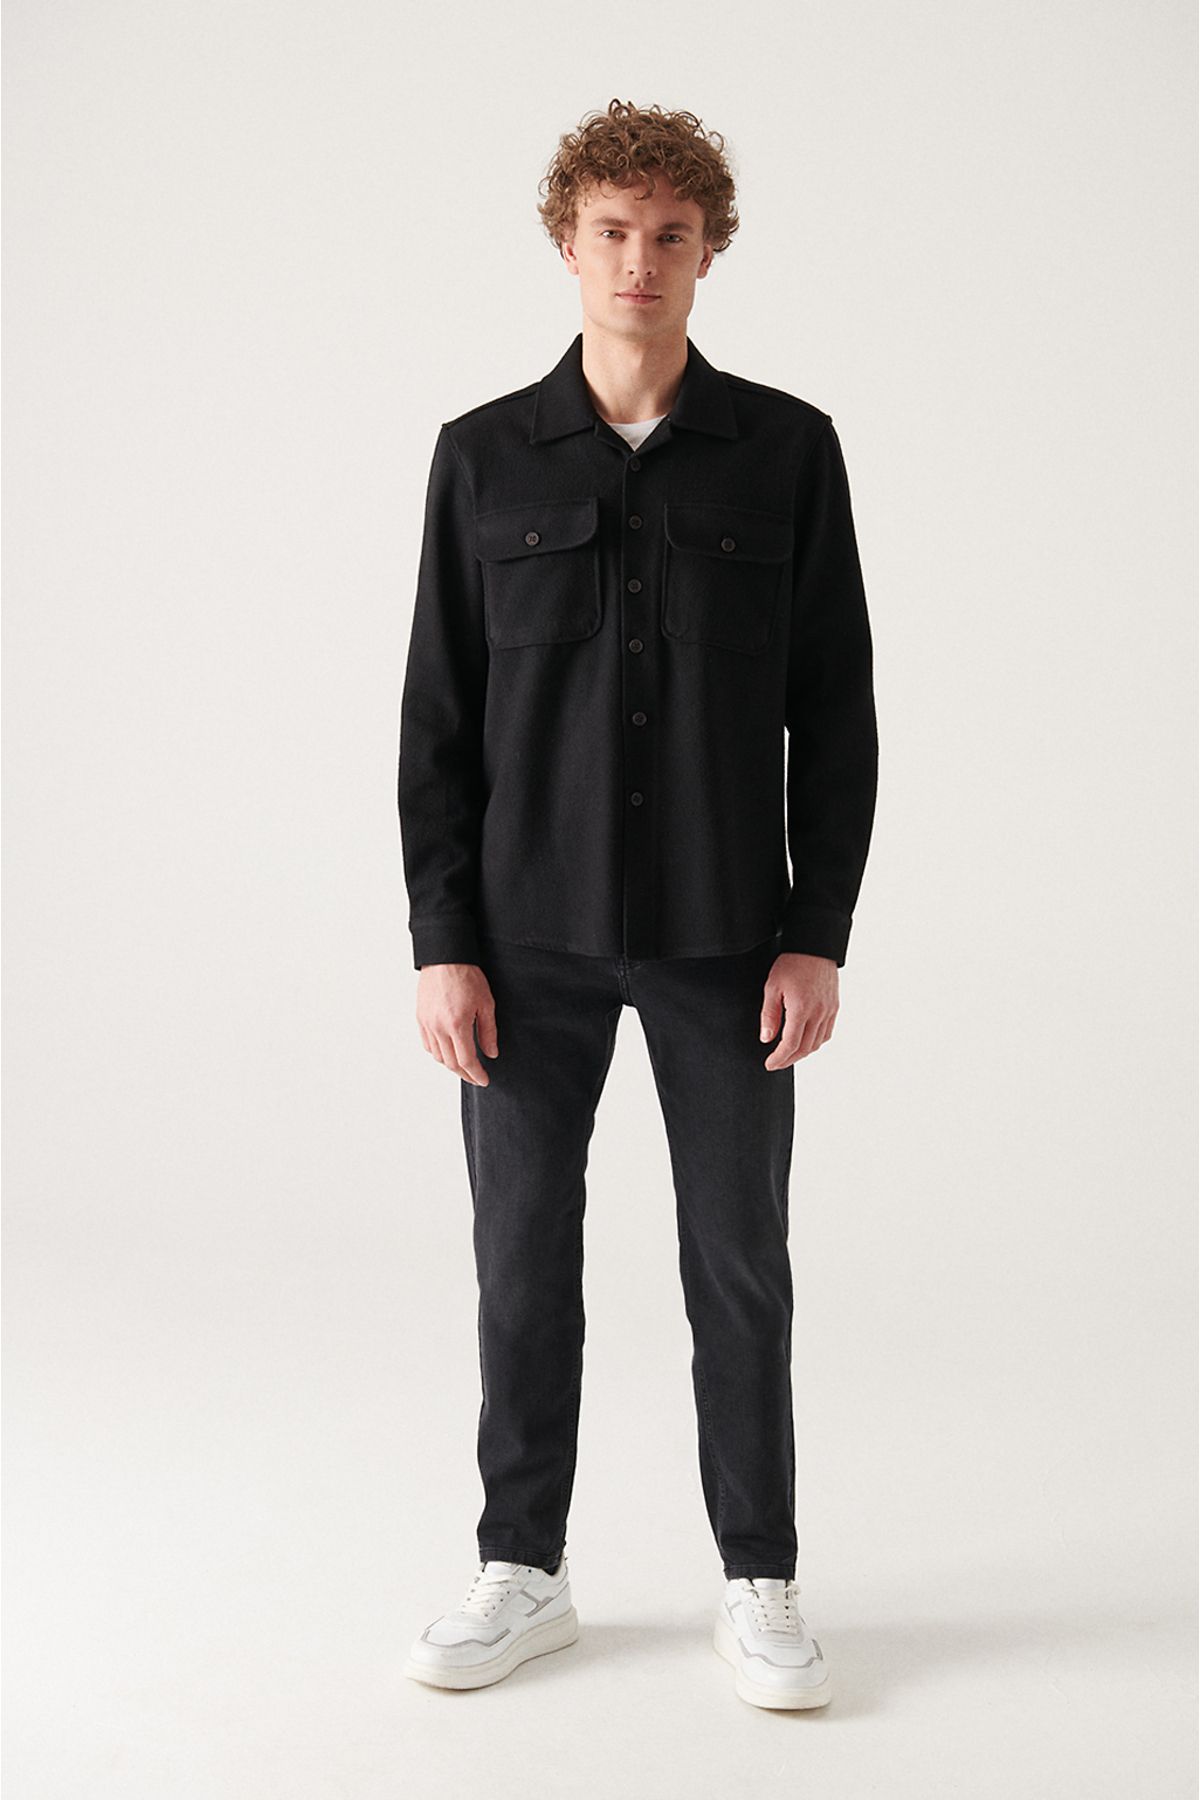 Avva آسایش نور پنبه سیاه مردانه مناسب کت ژاکت برش راحت E006010